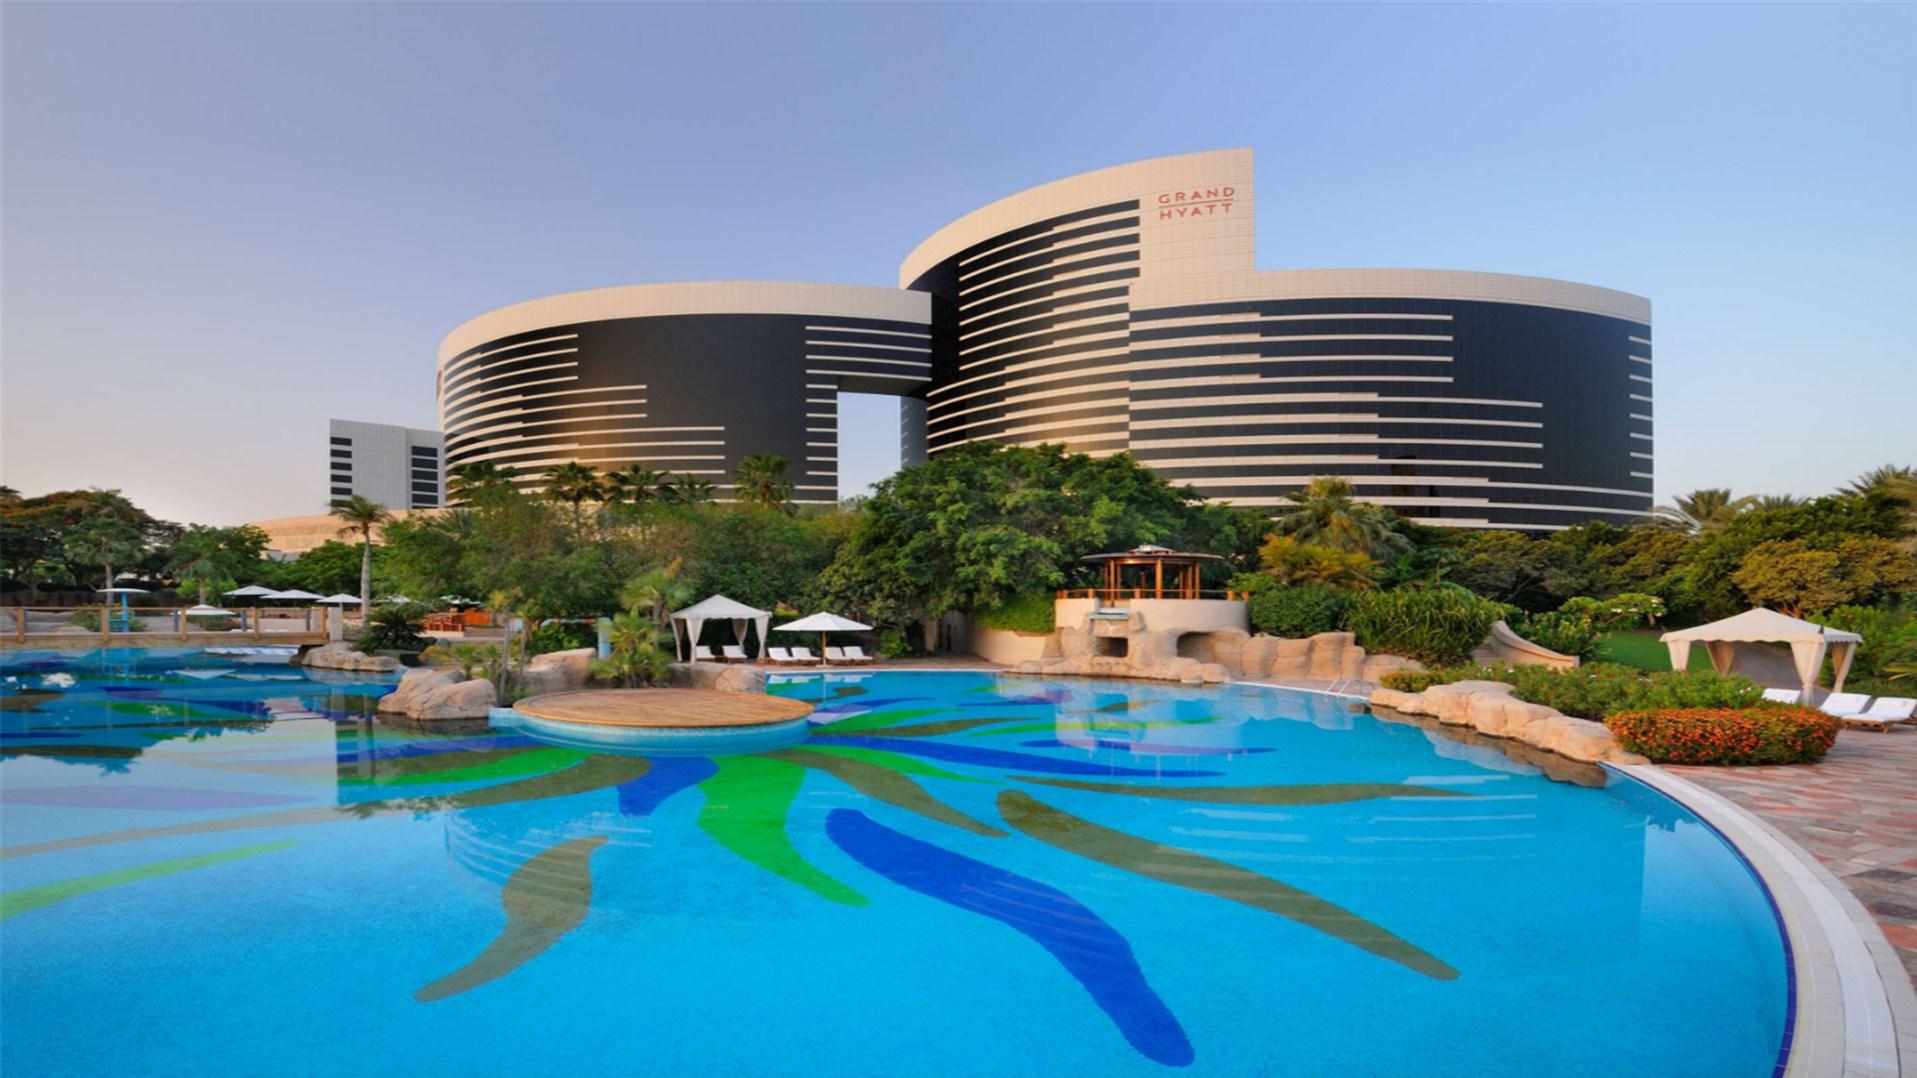 Dubai Hotel - FinanceFeeds